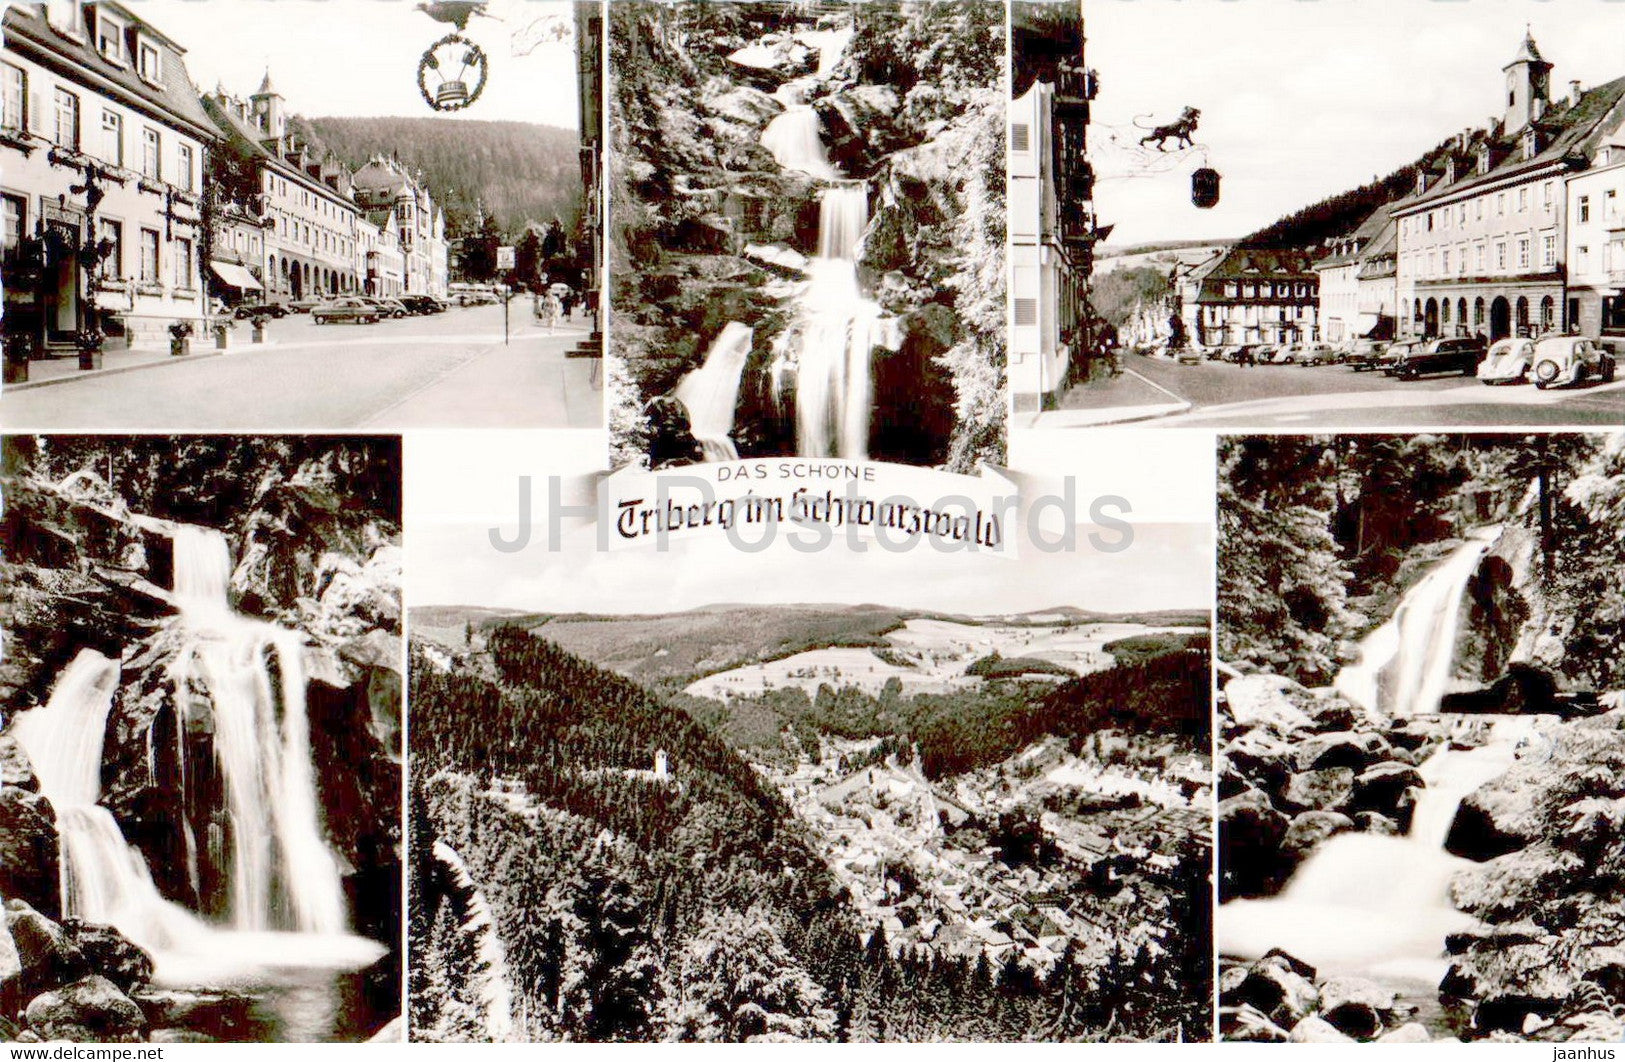 Das schone Triberg im Schwarzwald - old postcard - Germany - used - JH Postcards